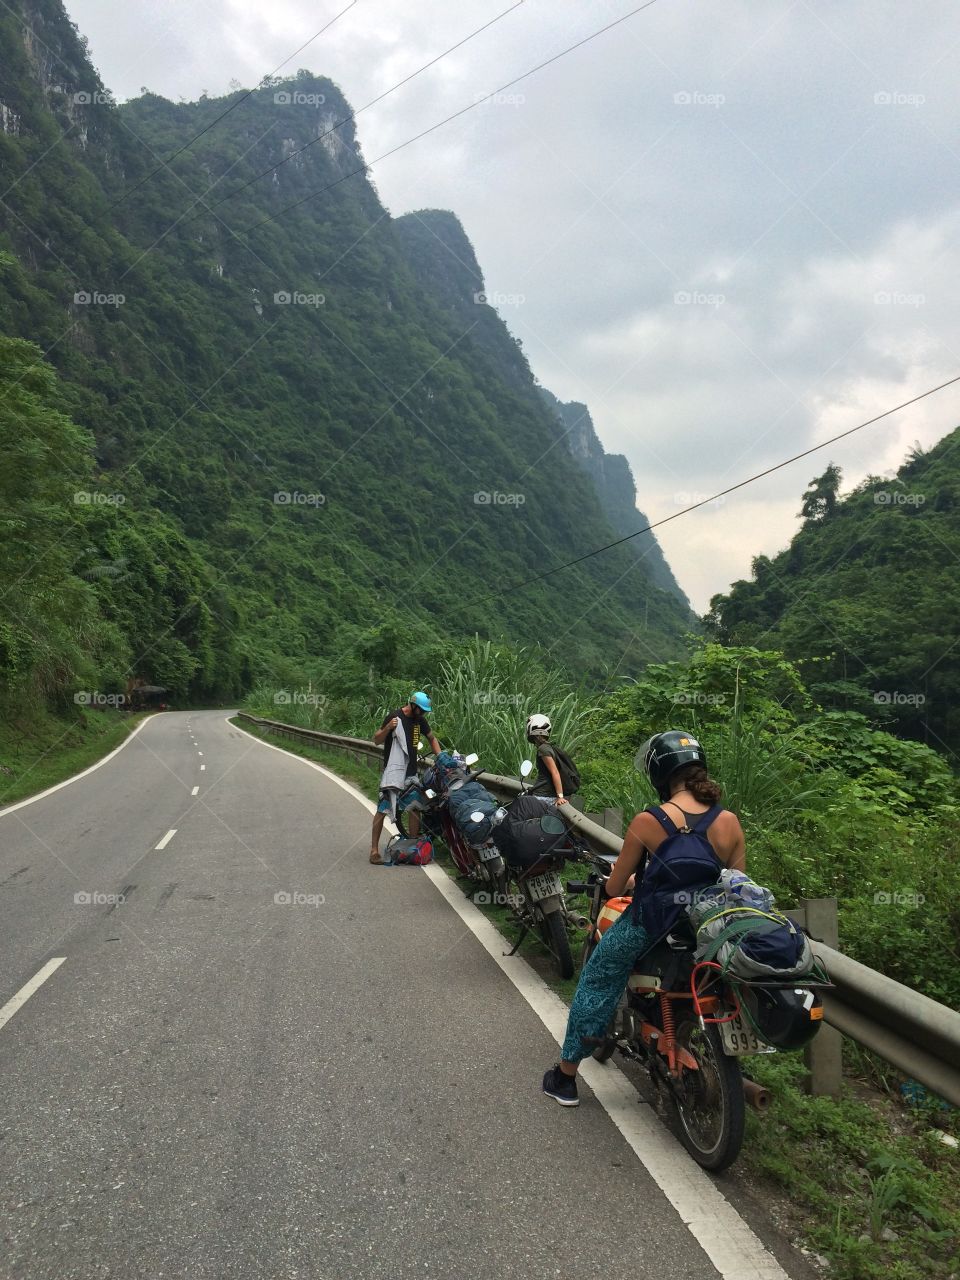 Riding in Vietnam